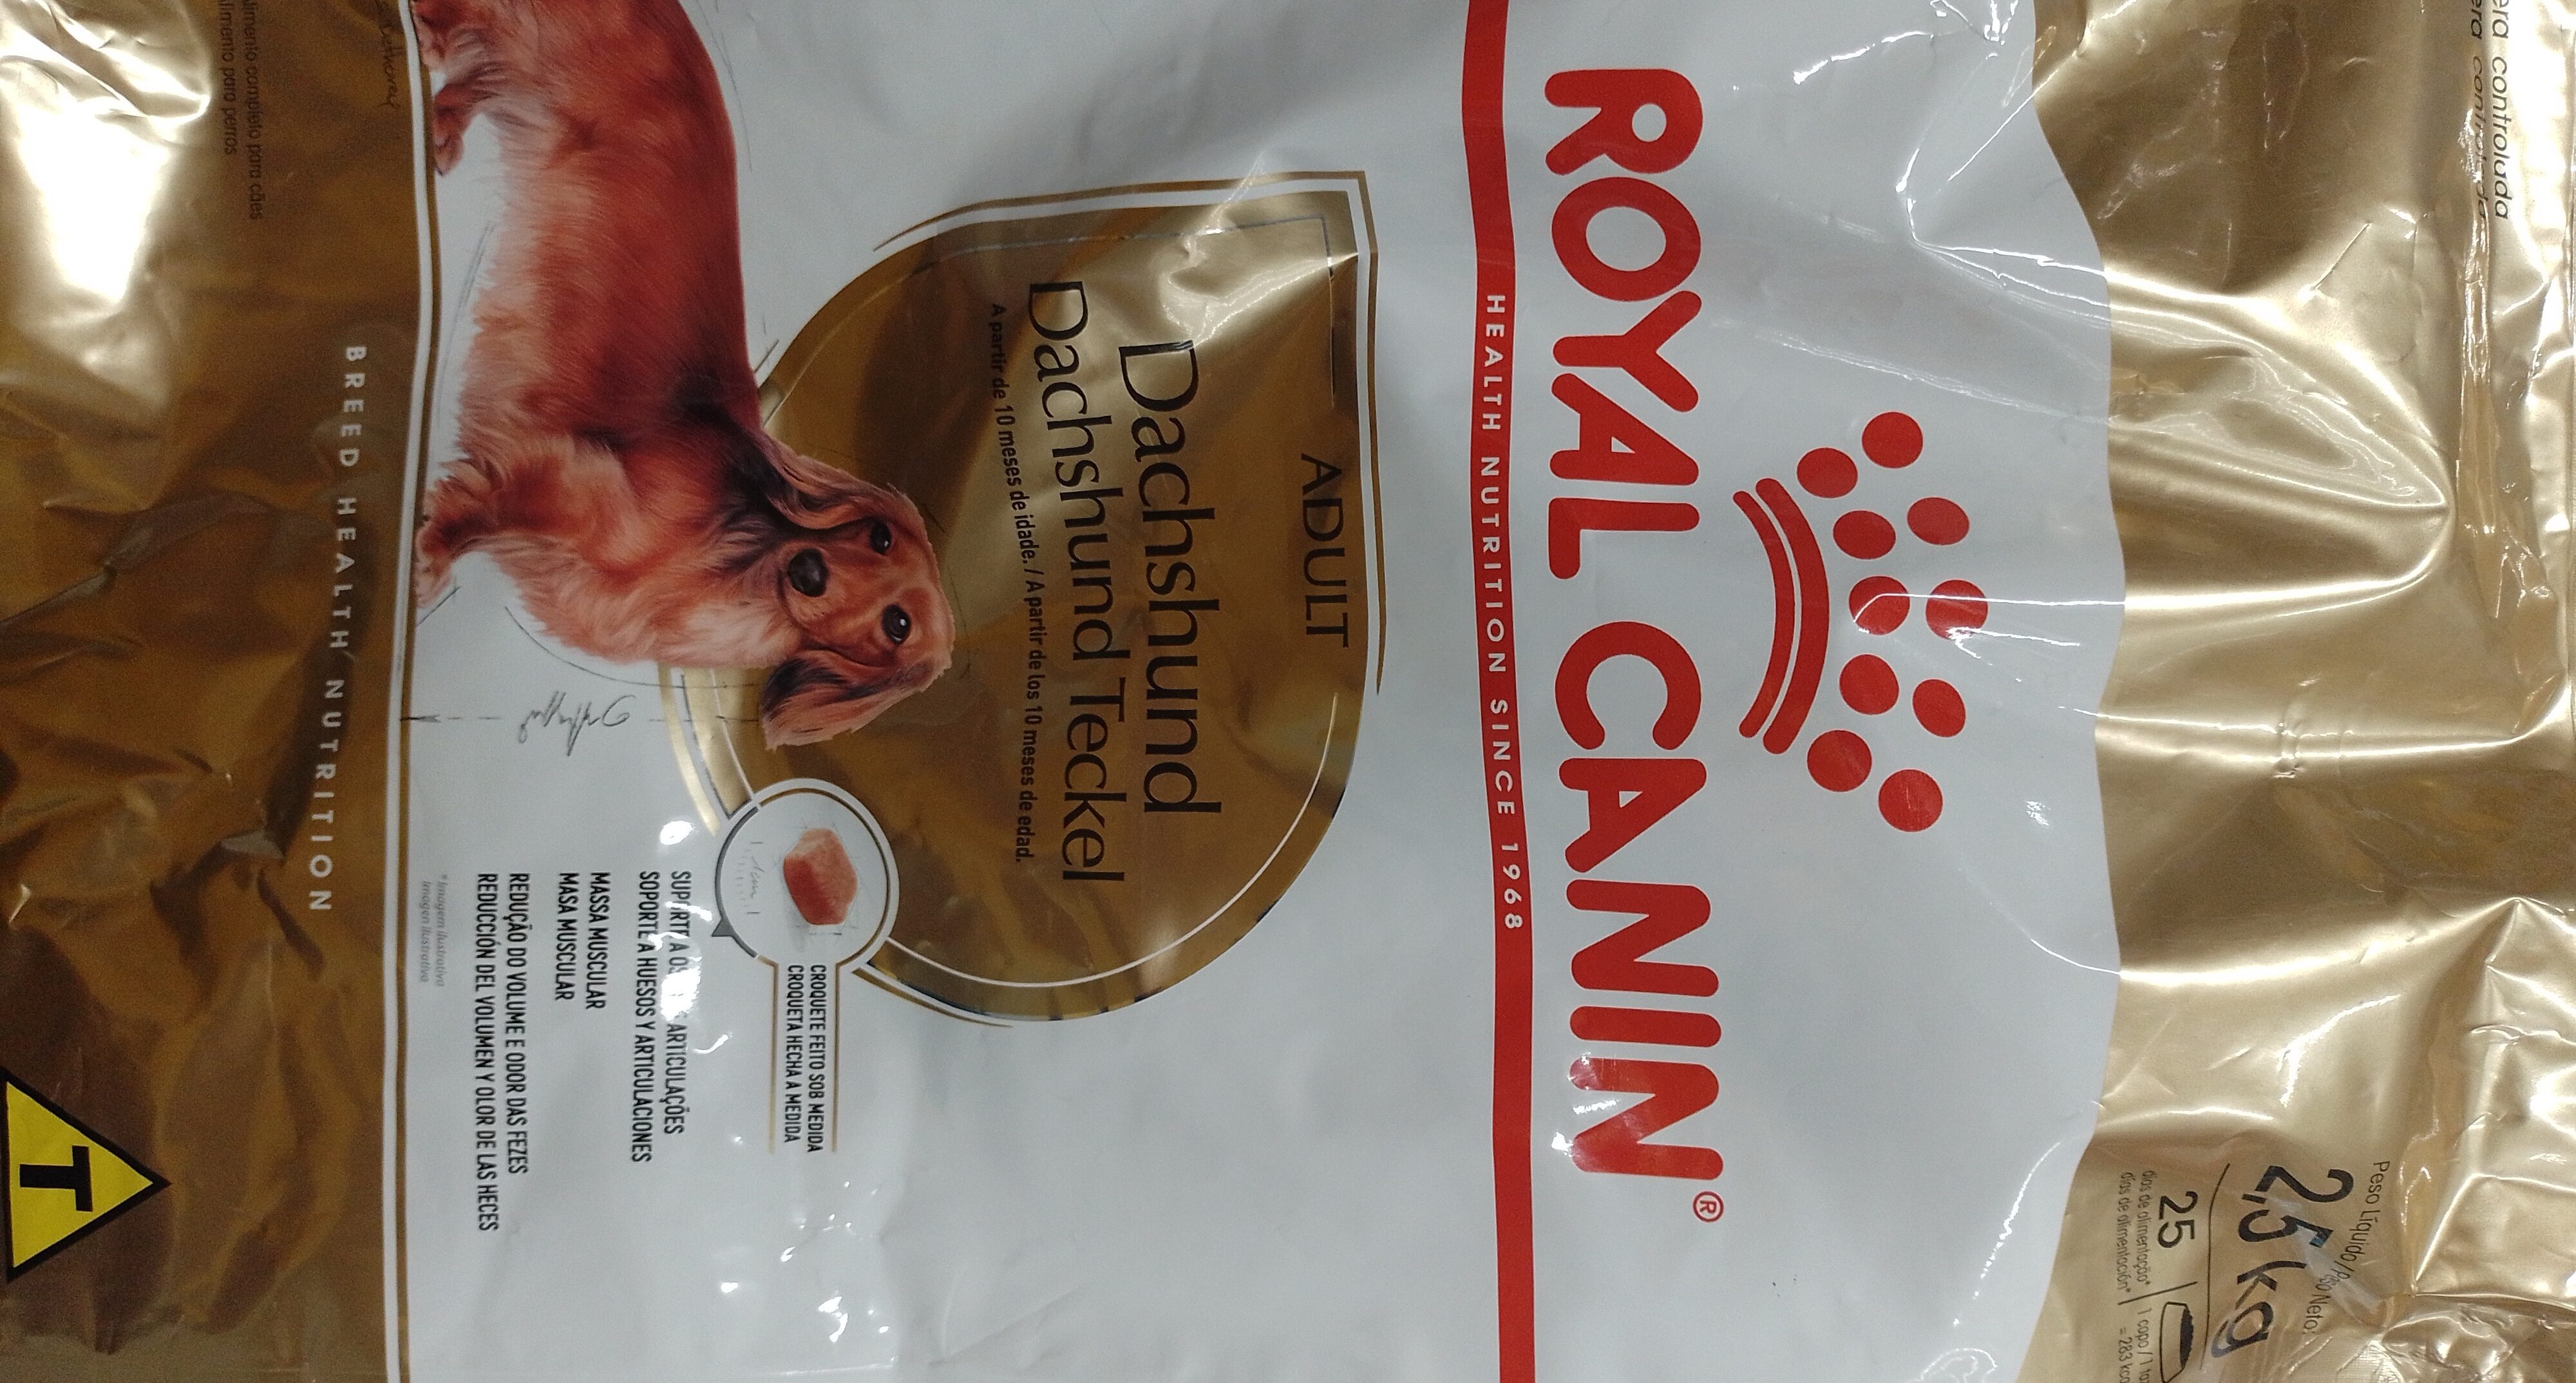 Royal Canin Dachshund Adulto 2,5kg - Product - pt